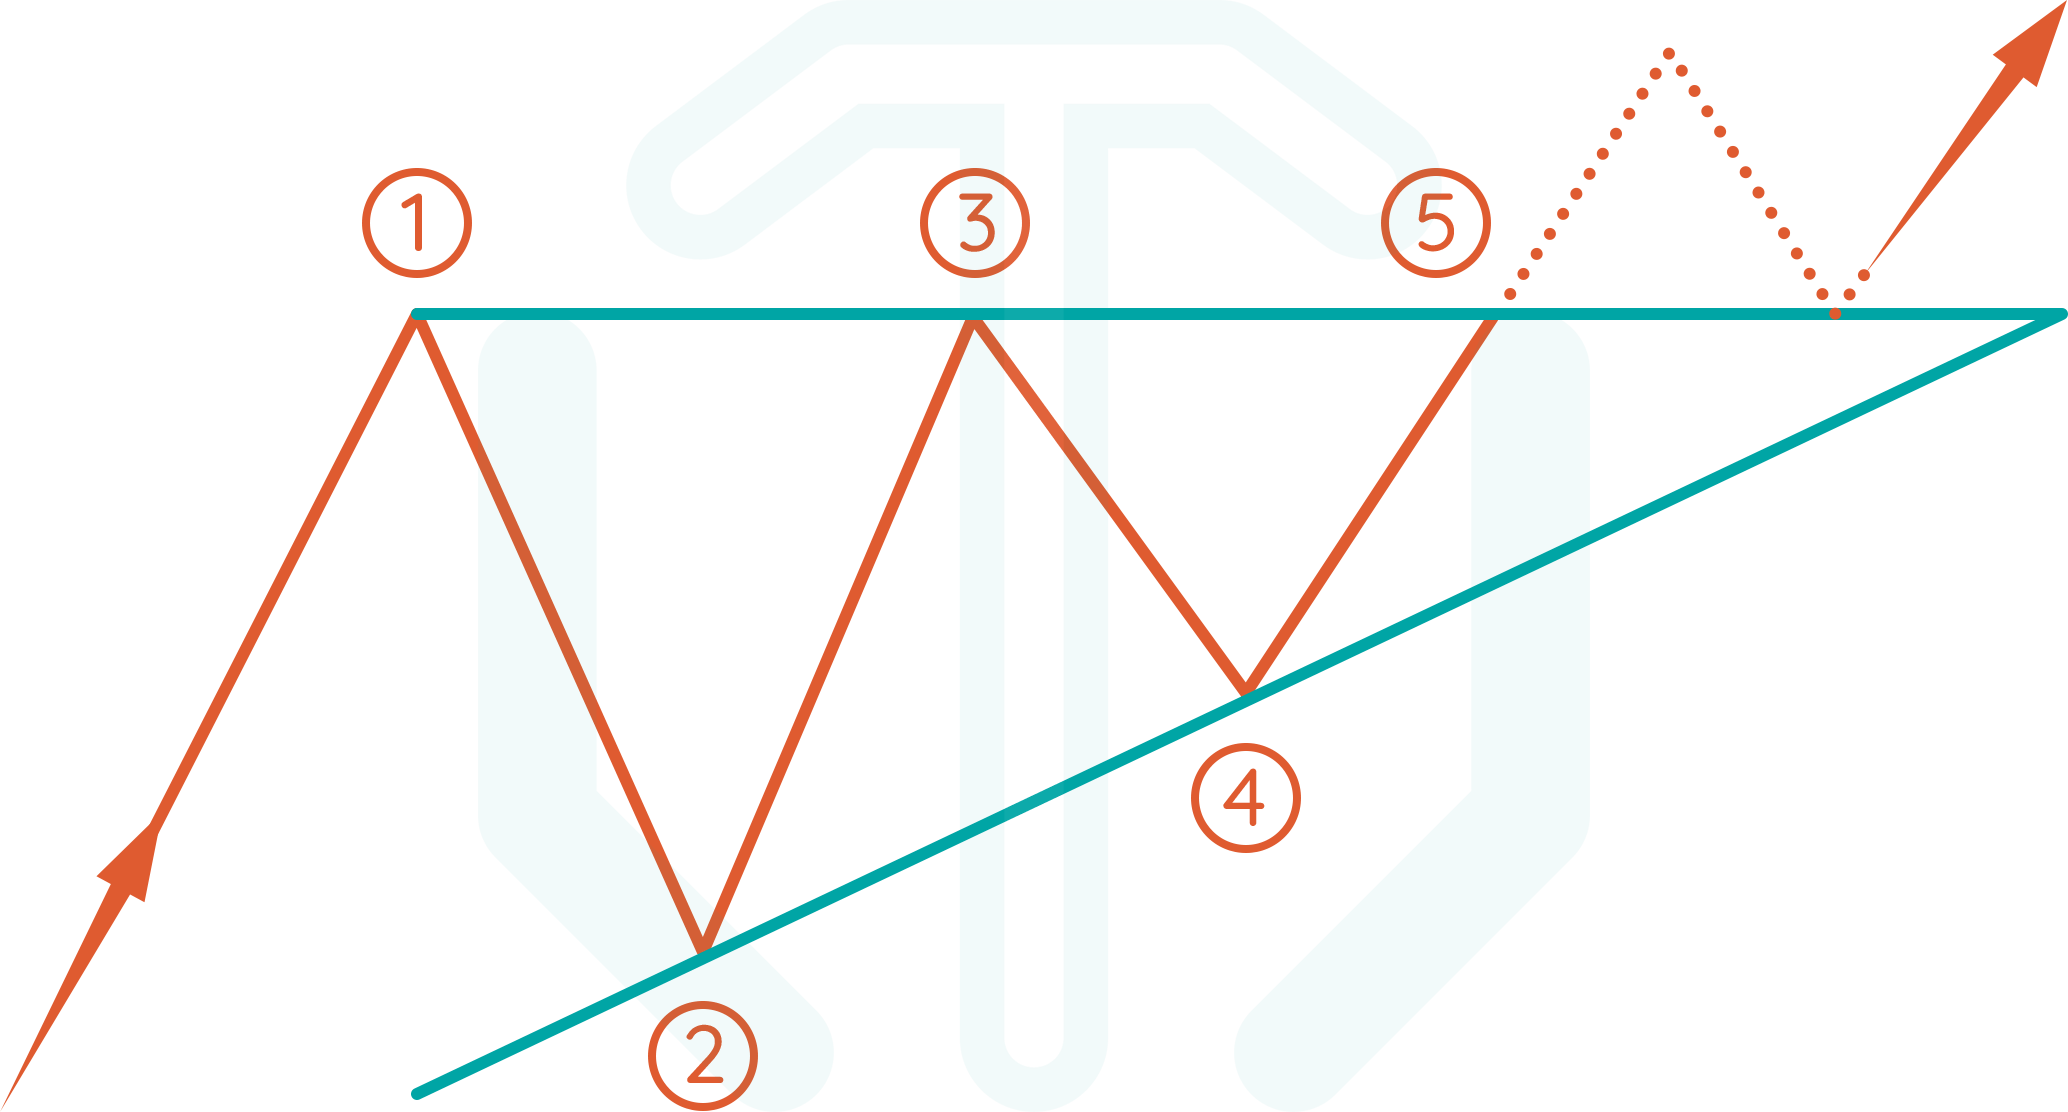 Ascending triangle chart pattern illustration